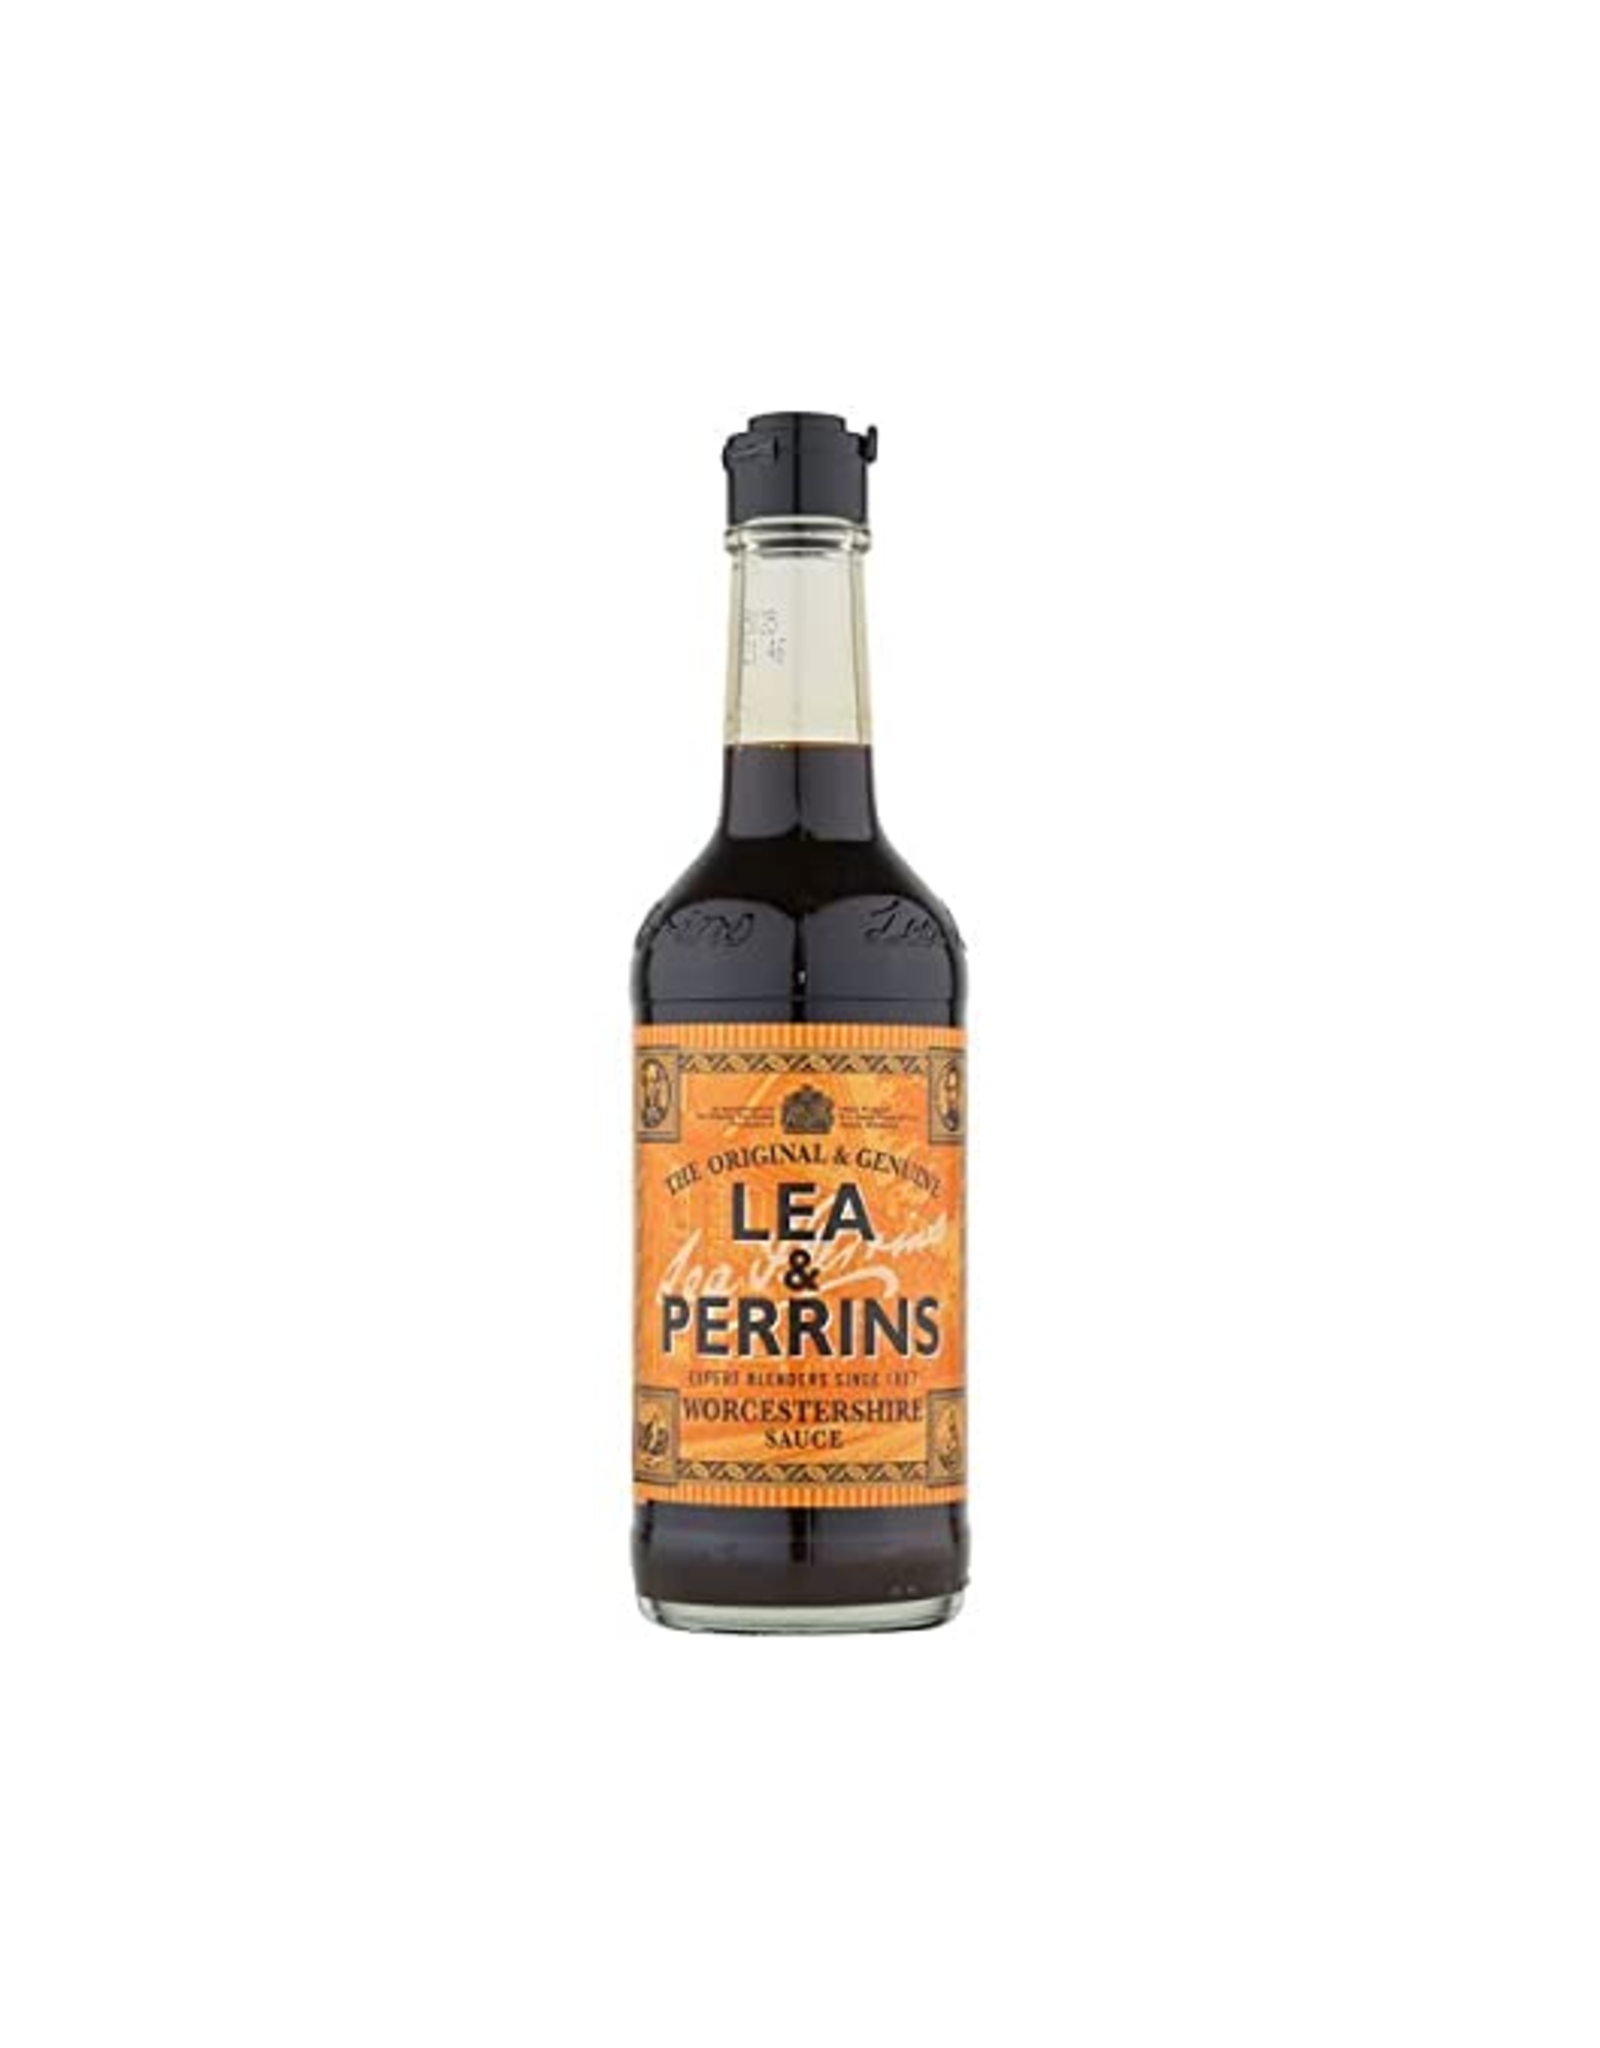 The Original & Geniune Lea & Perrins Worcestershire Sauce